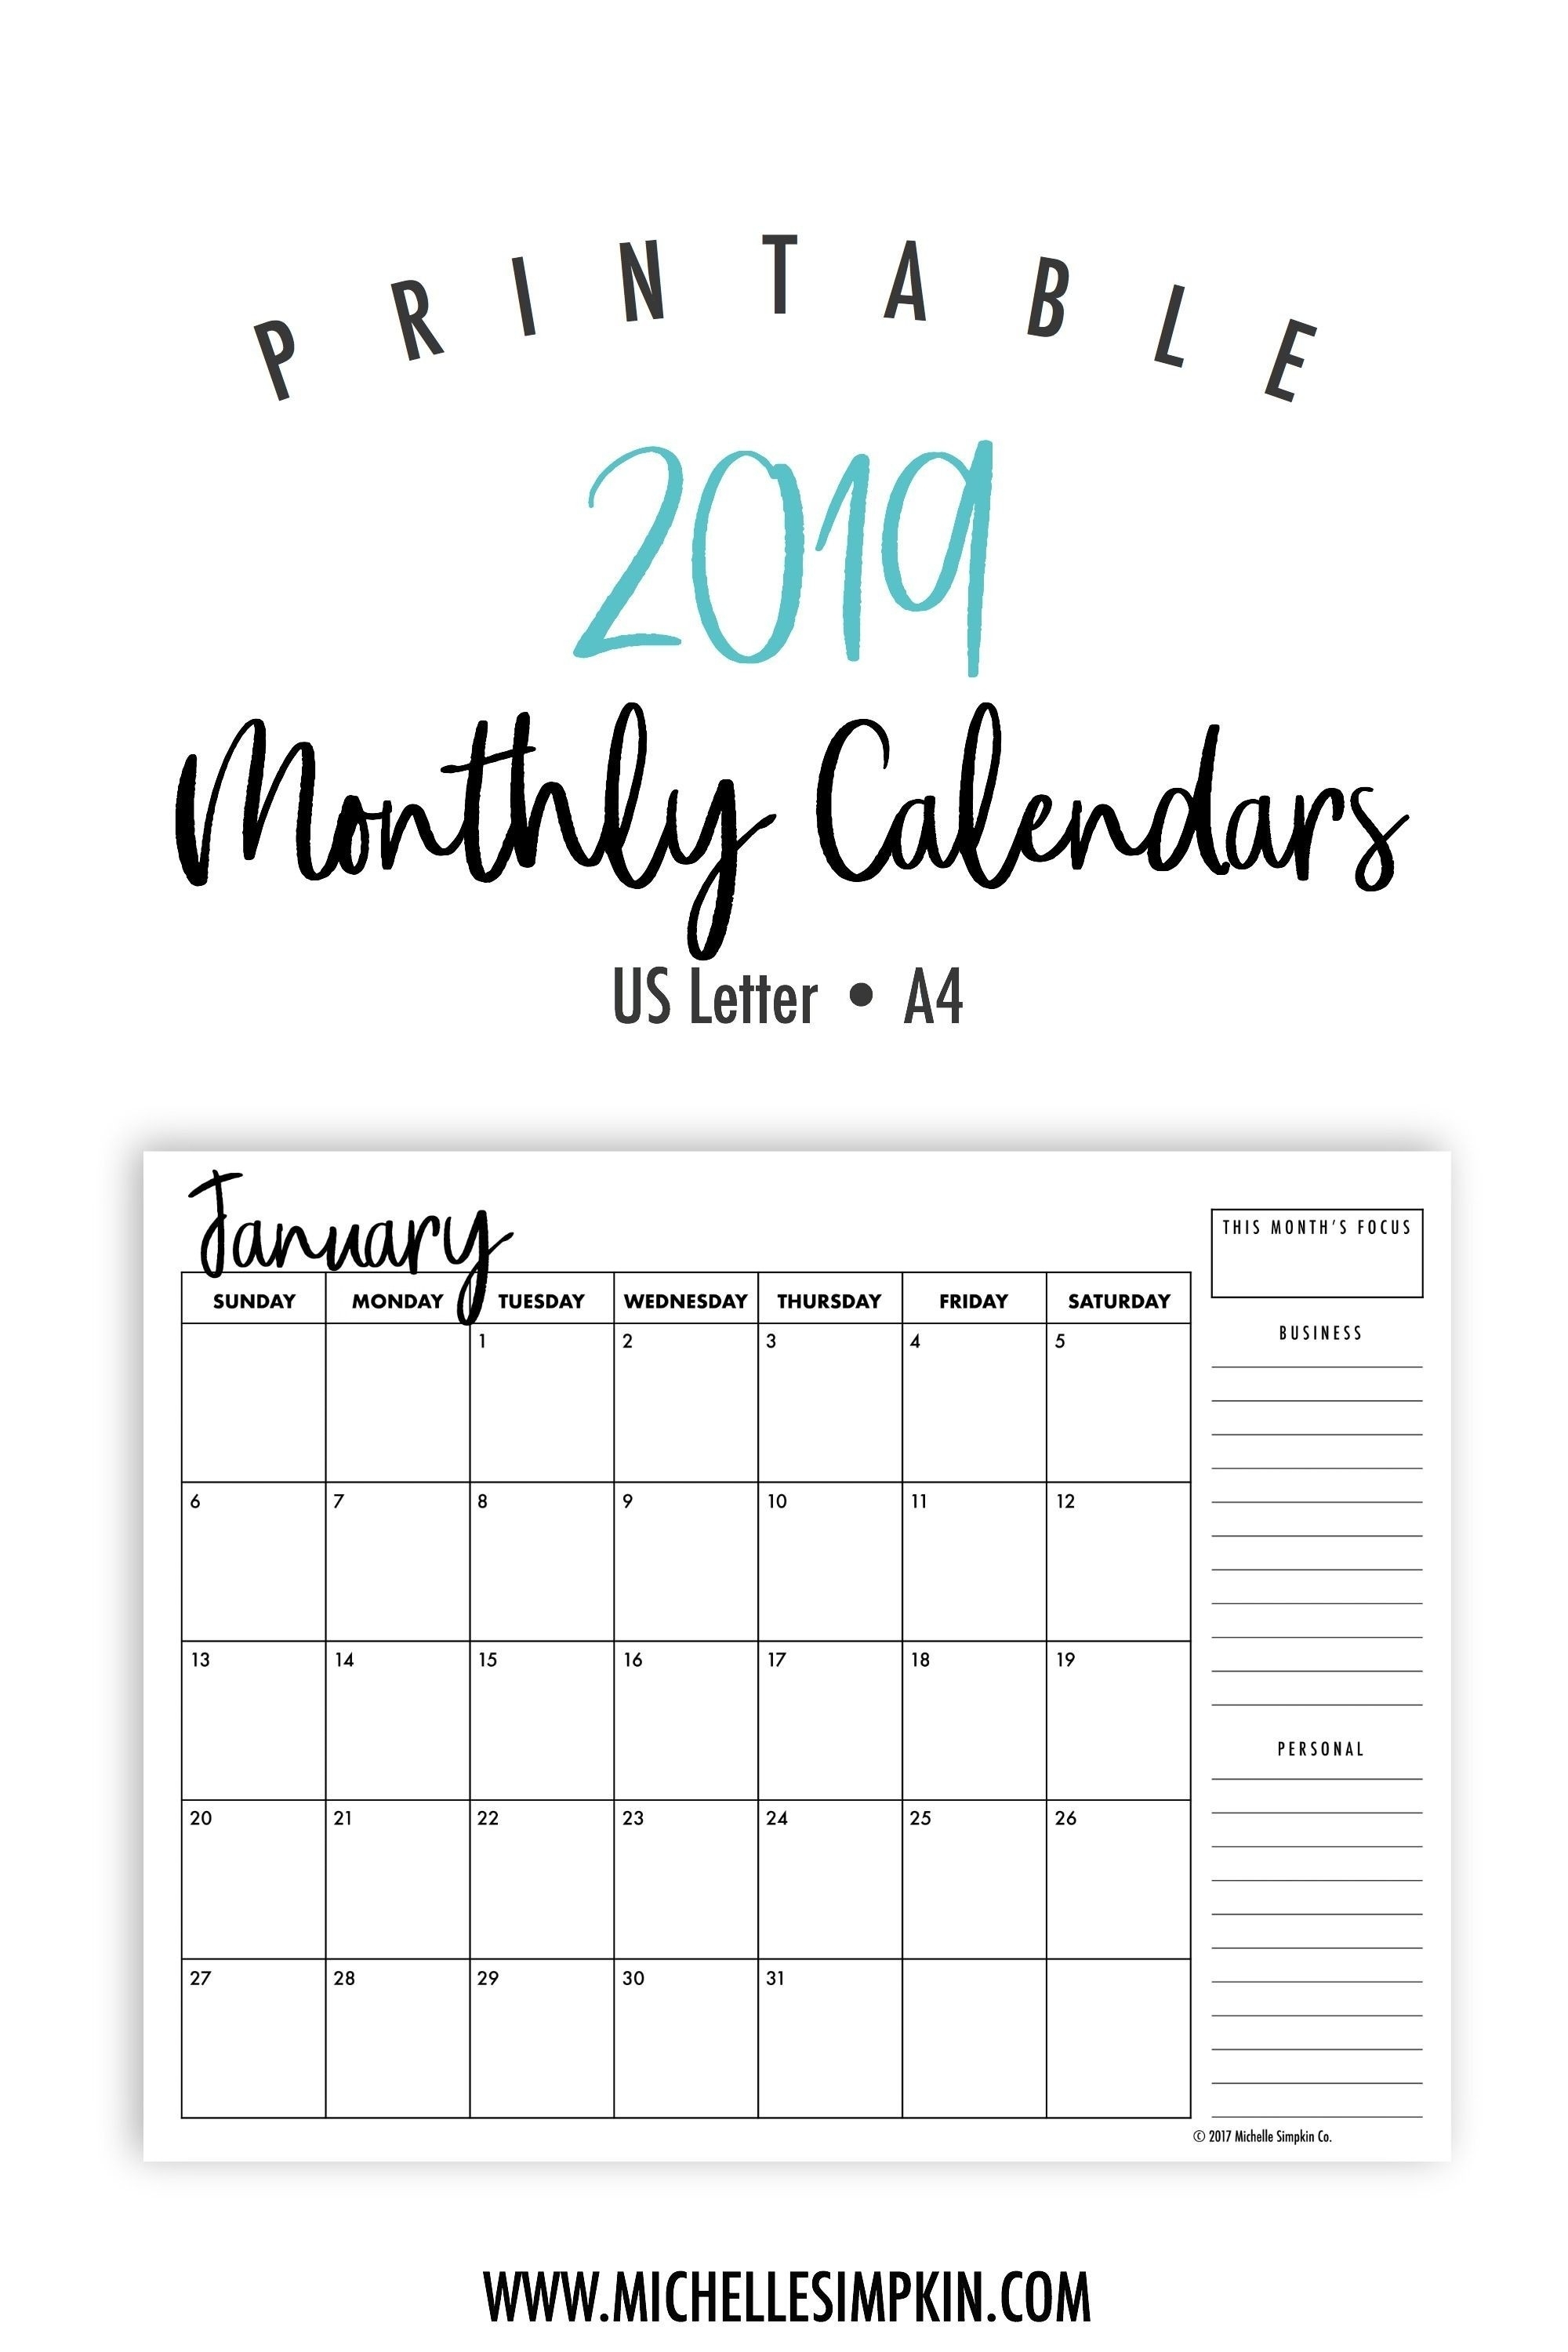 Printable Calendar Custom Dates | Printable Calendar 2020